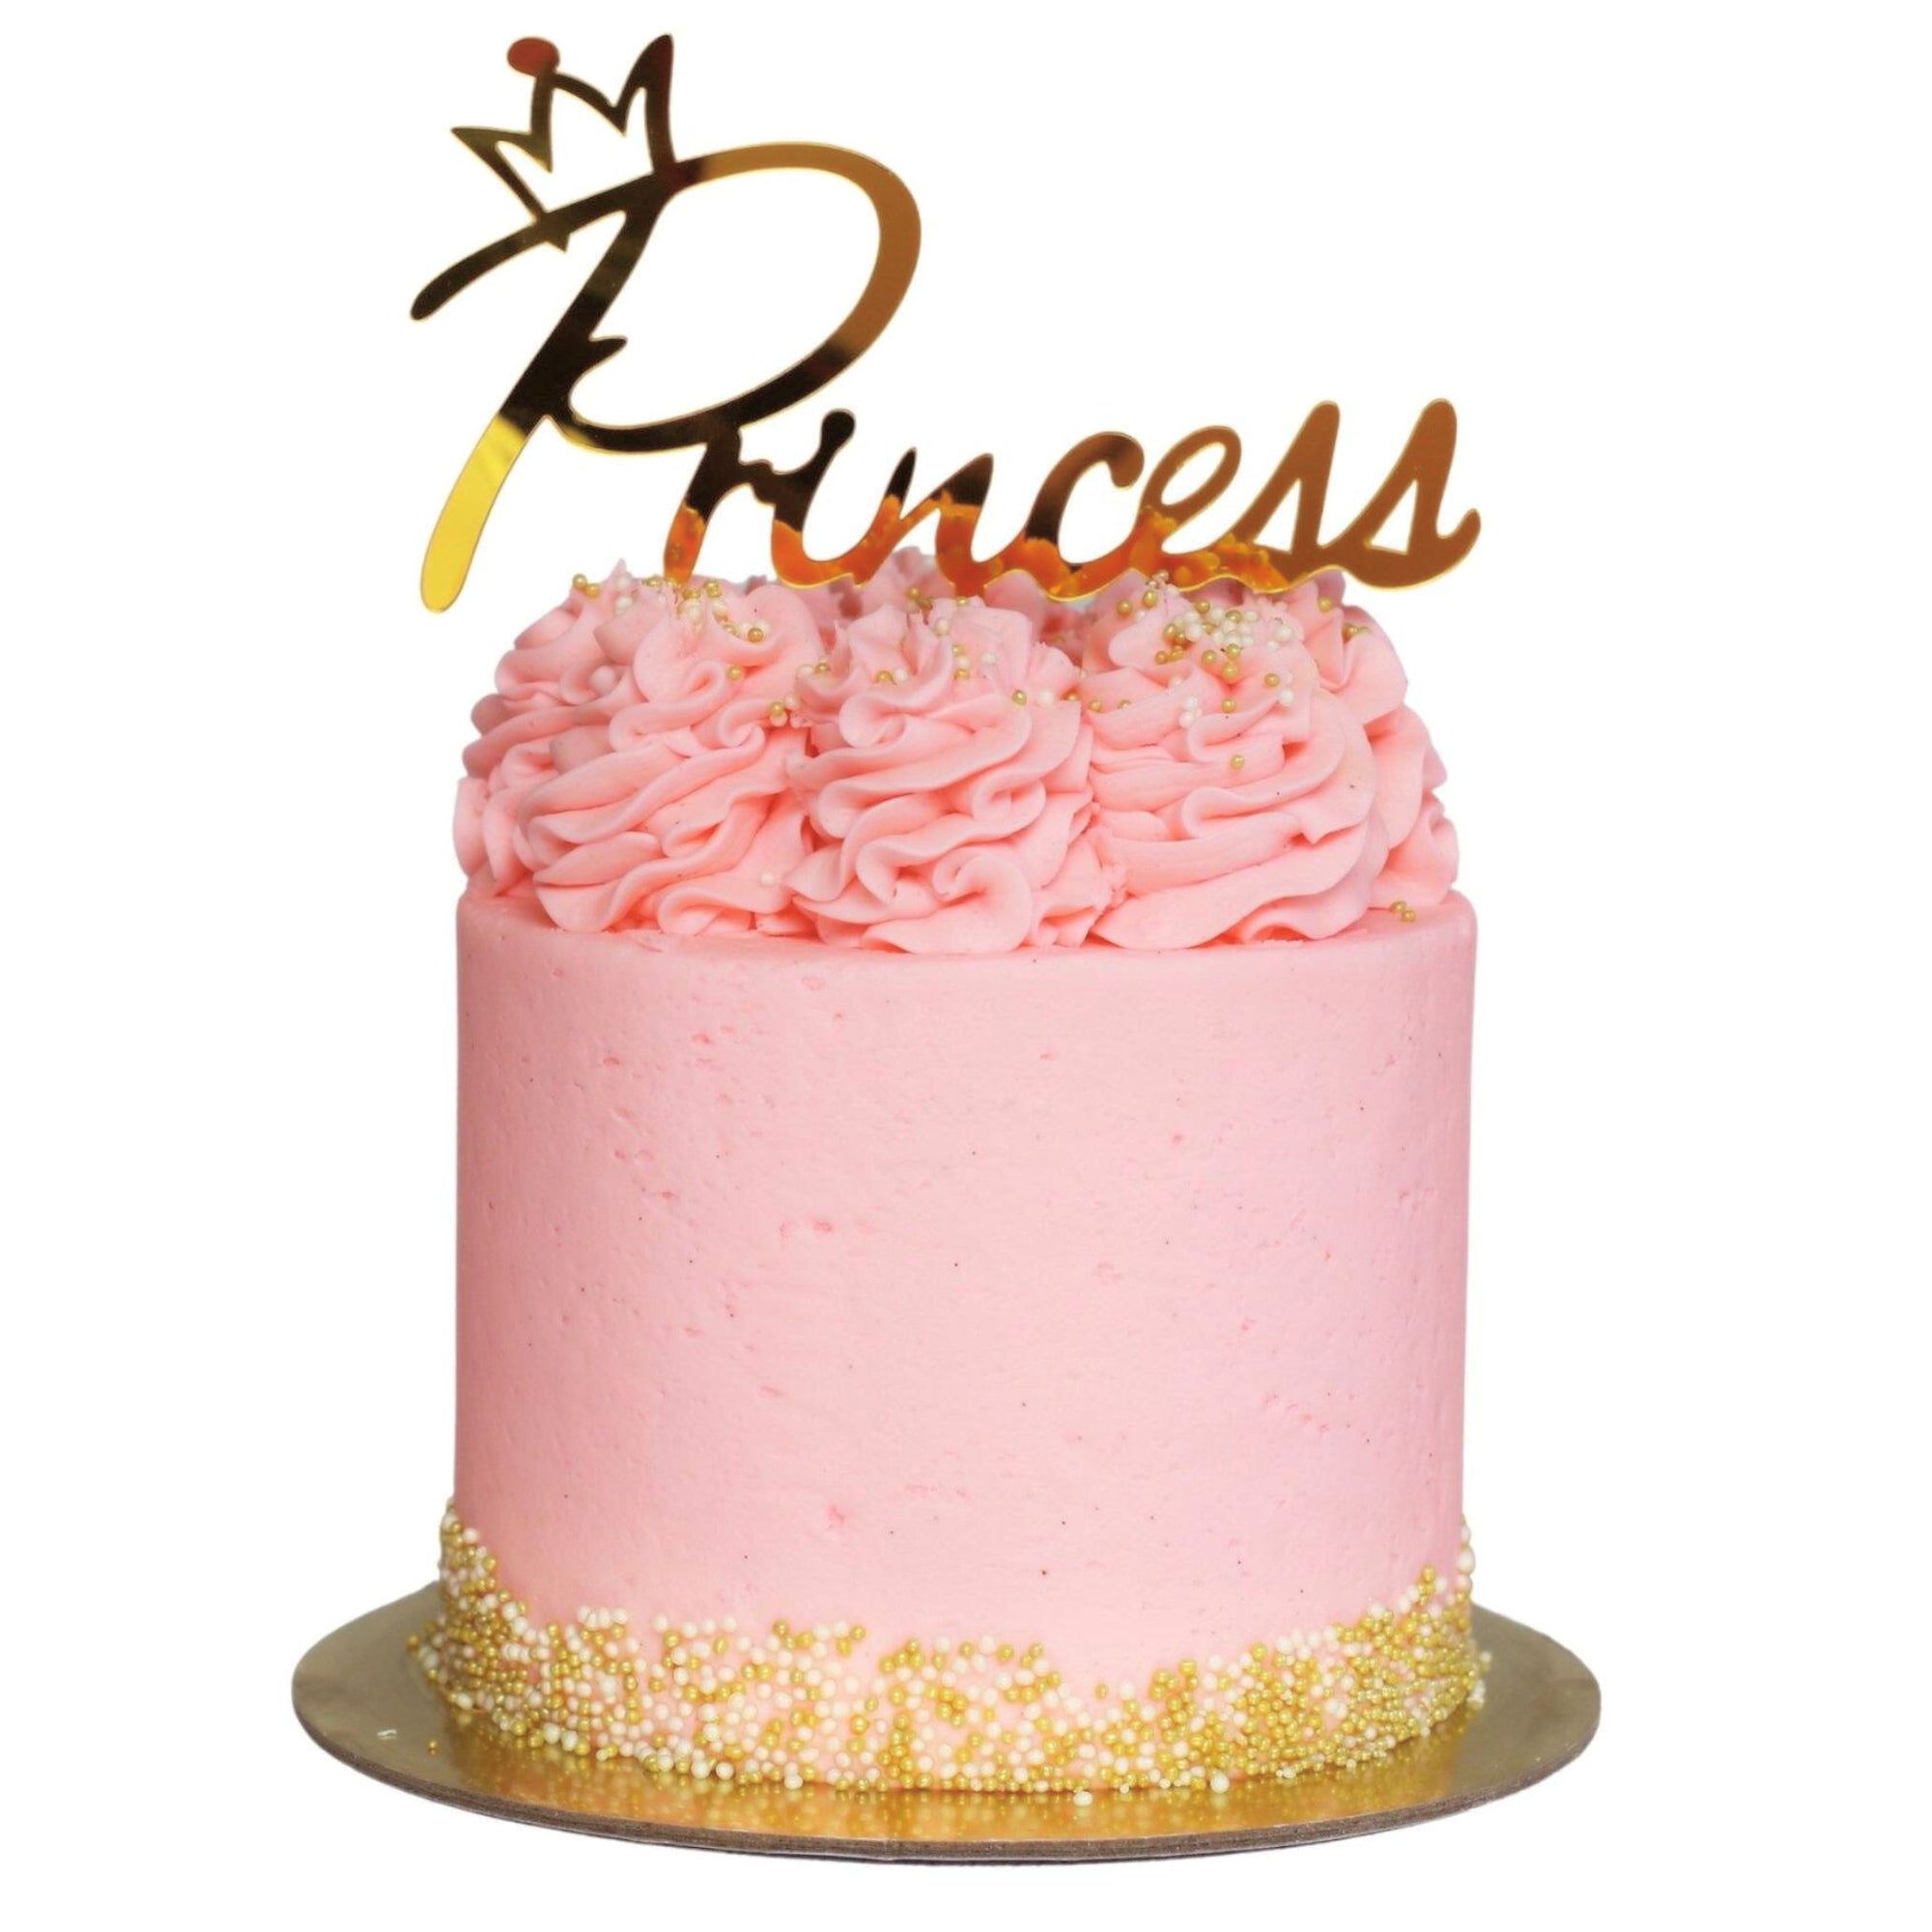 Princess Cake - The Cupcake Queens 